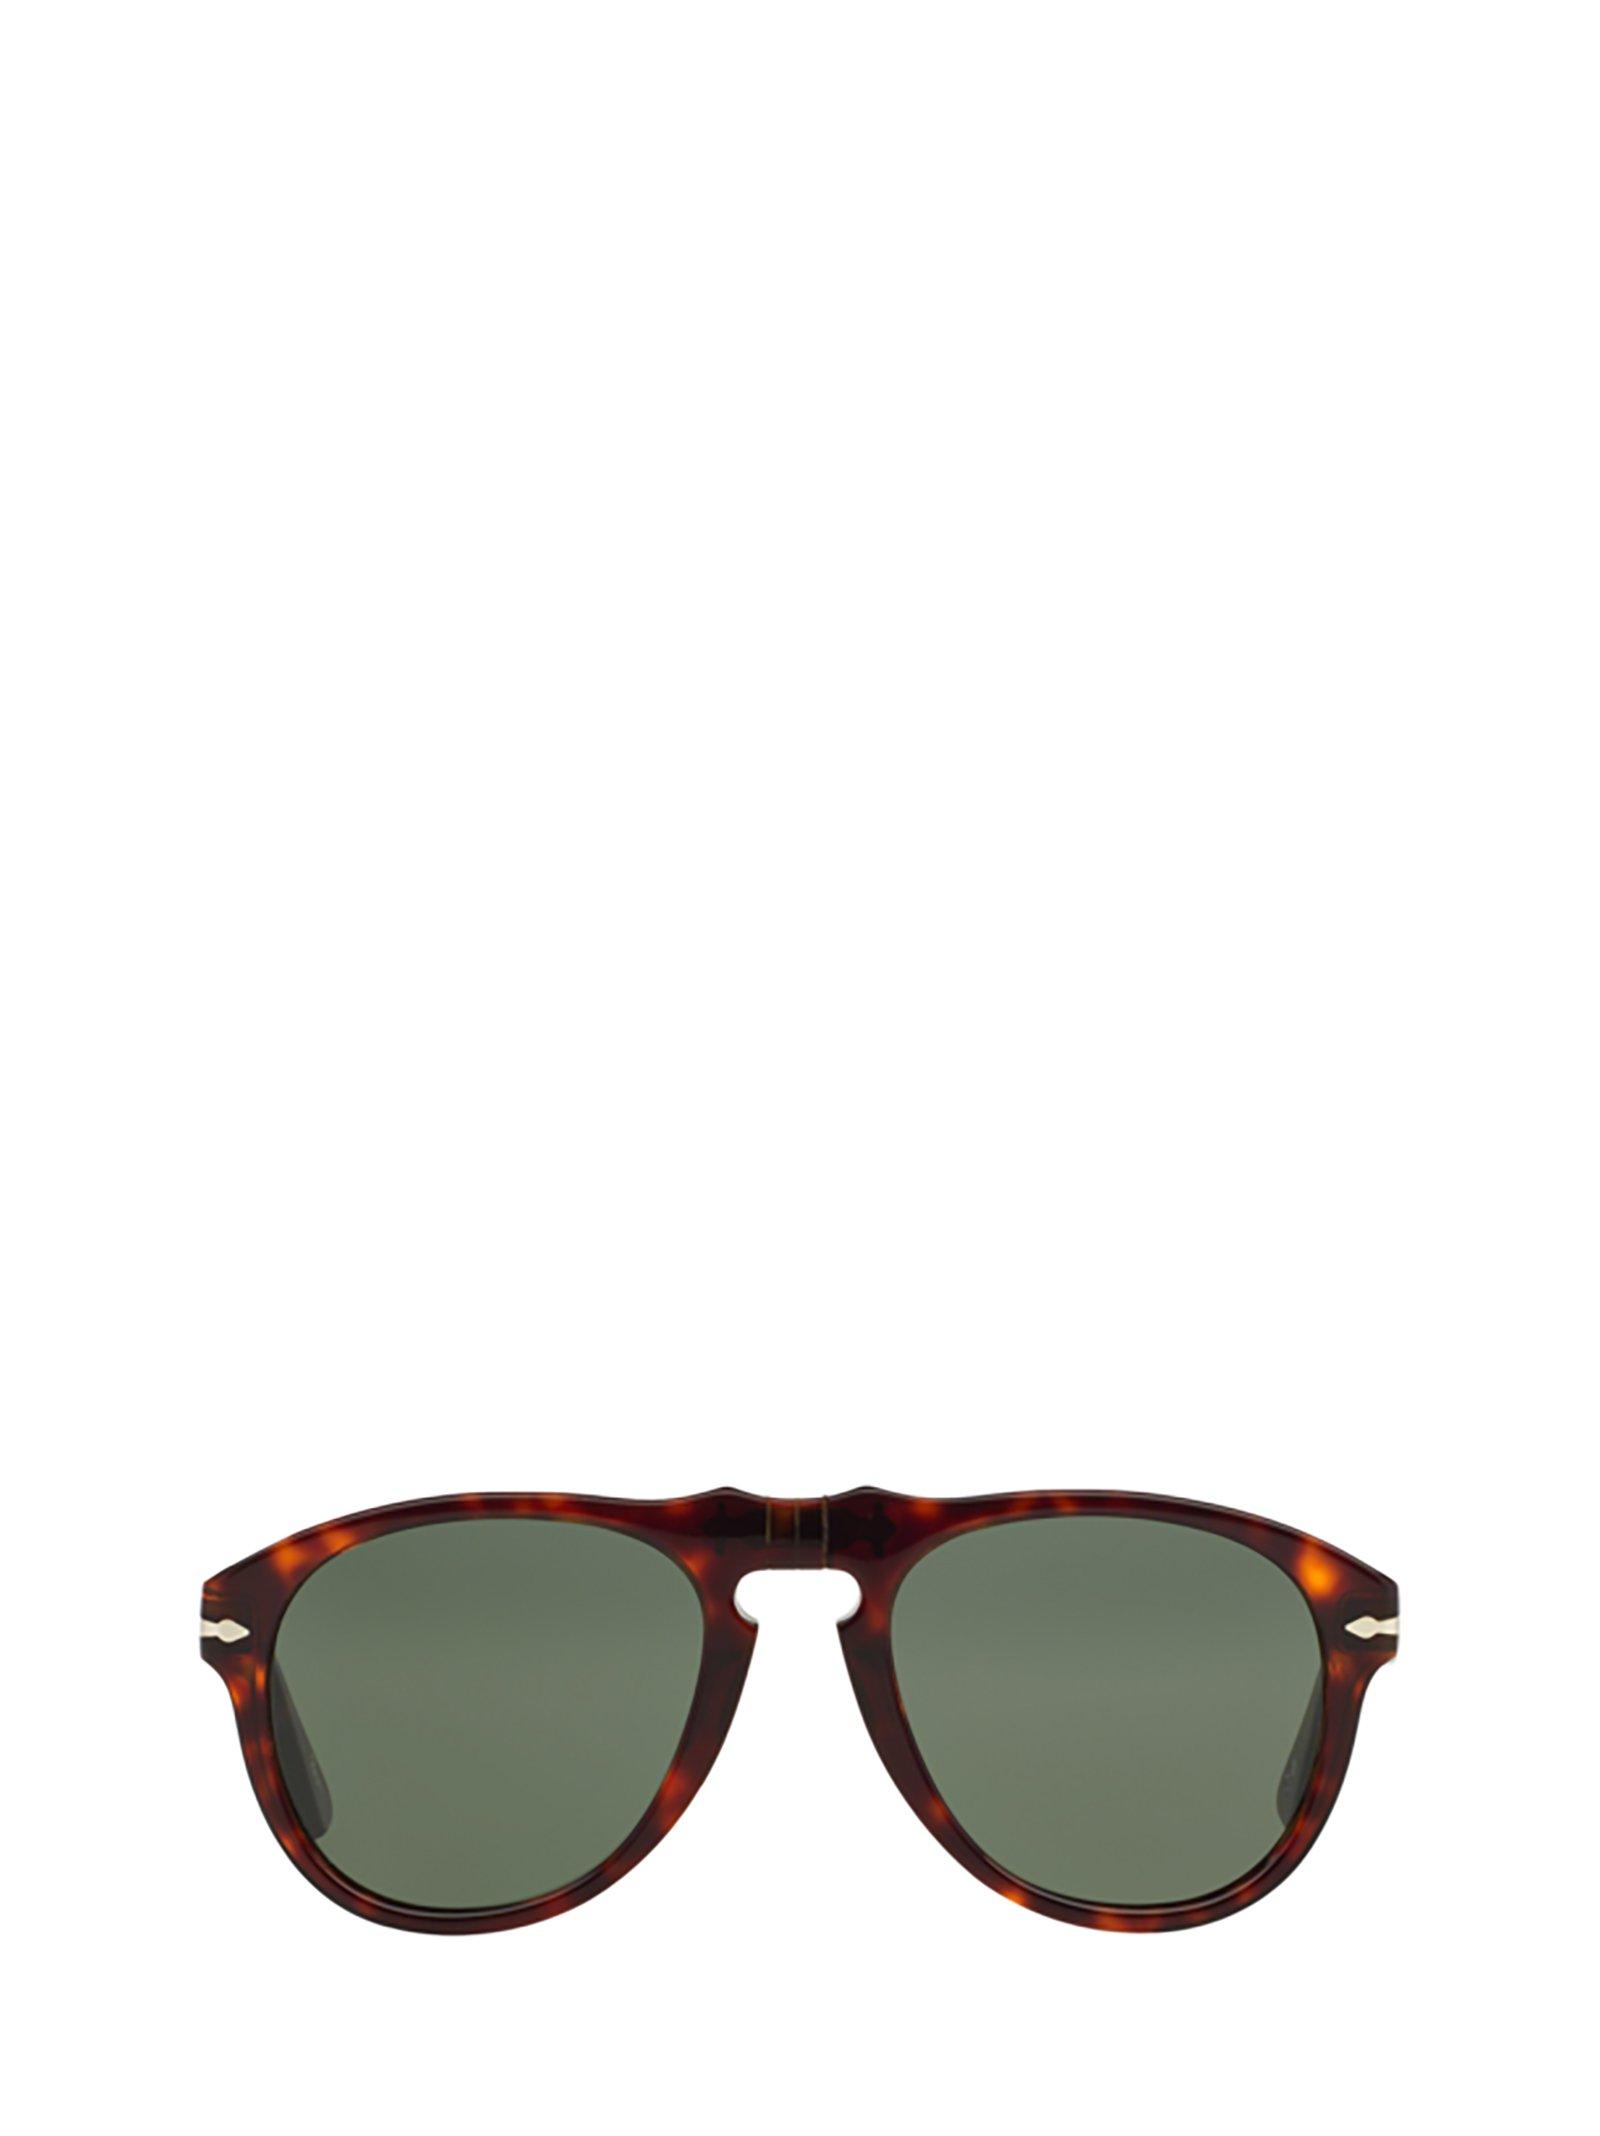 Persol 649 Series Aviator Frame Sunglasses For Men Lyst